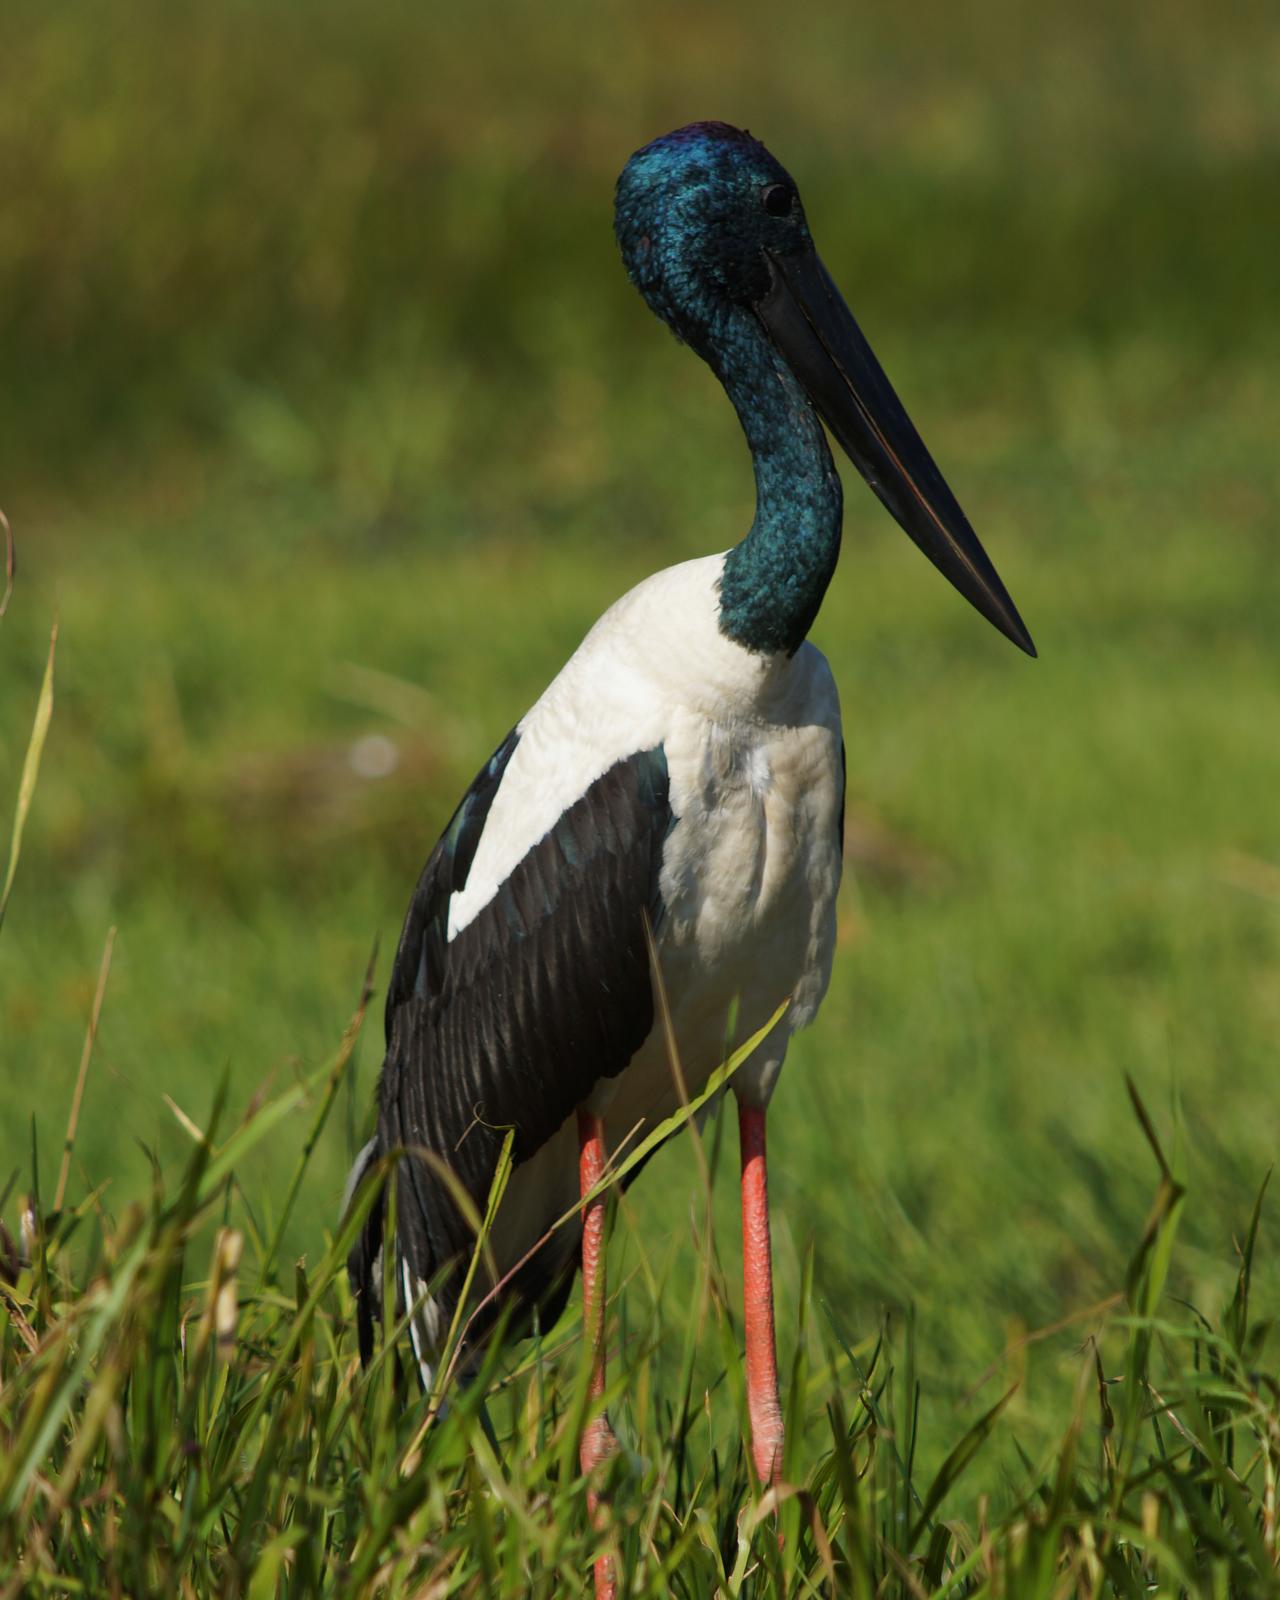 Black-necked Stork Photo by Steve Percival